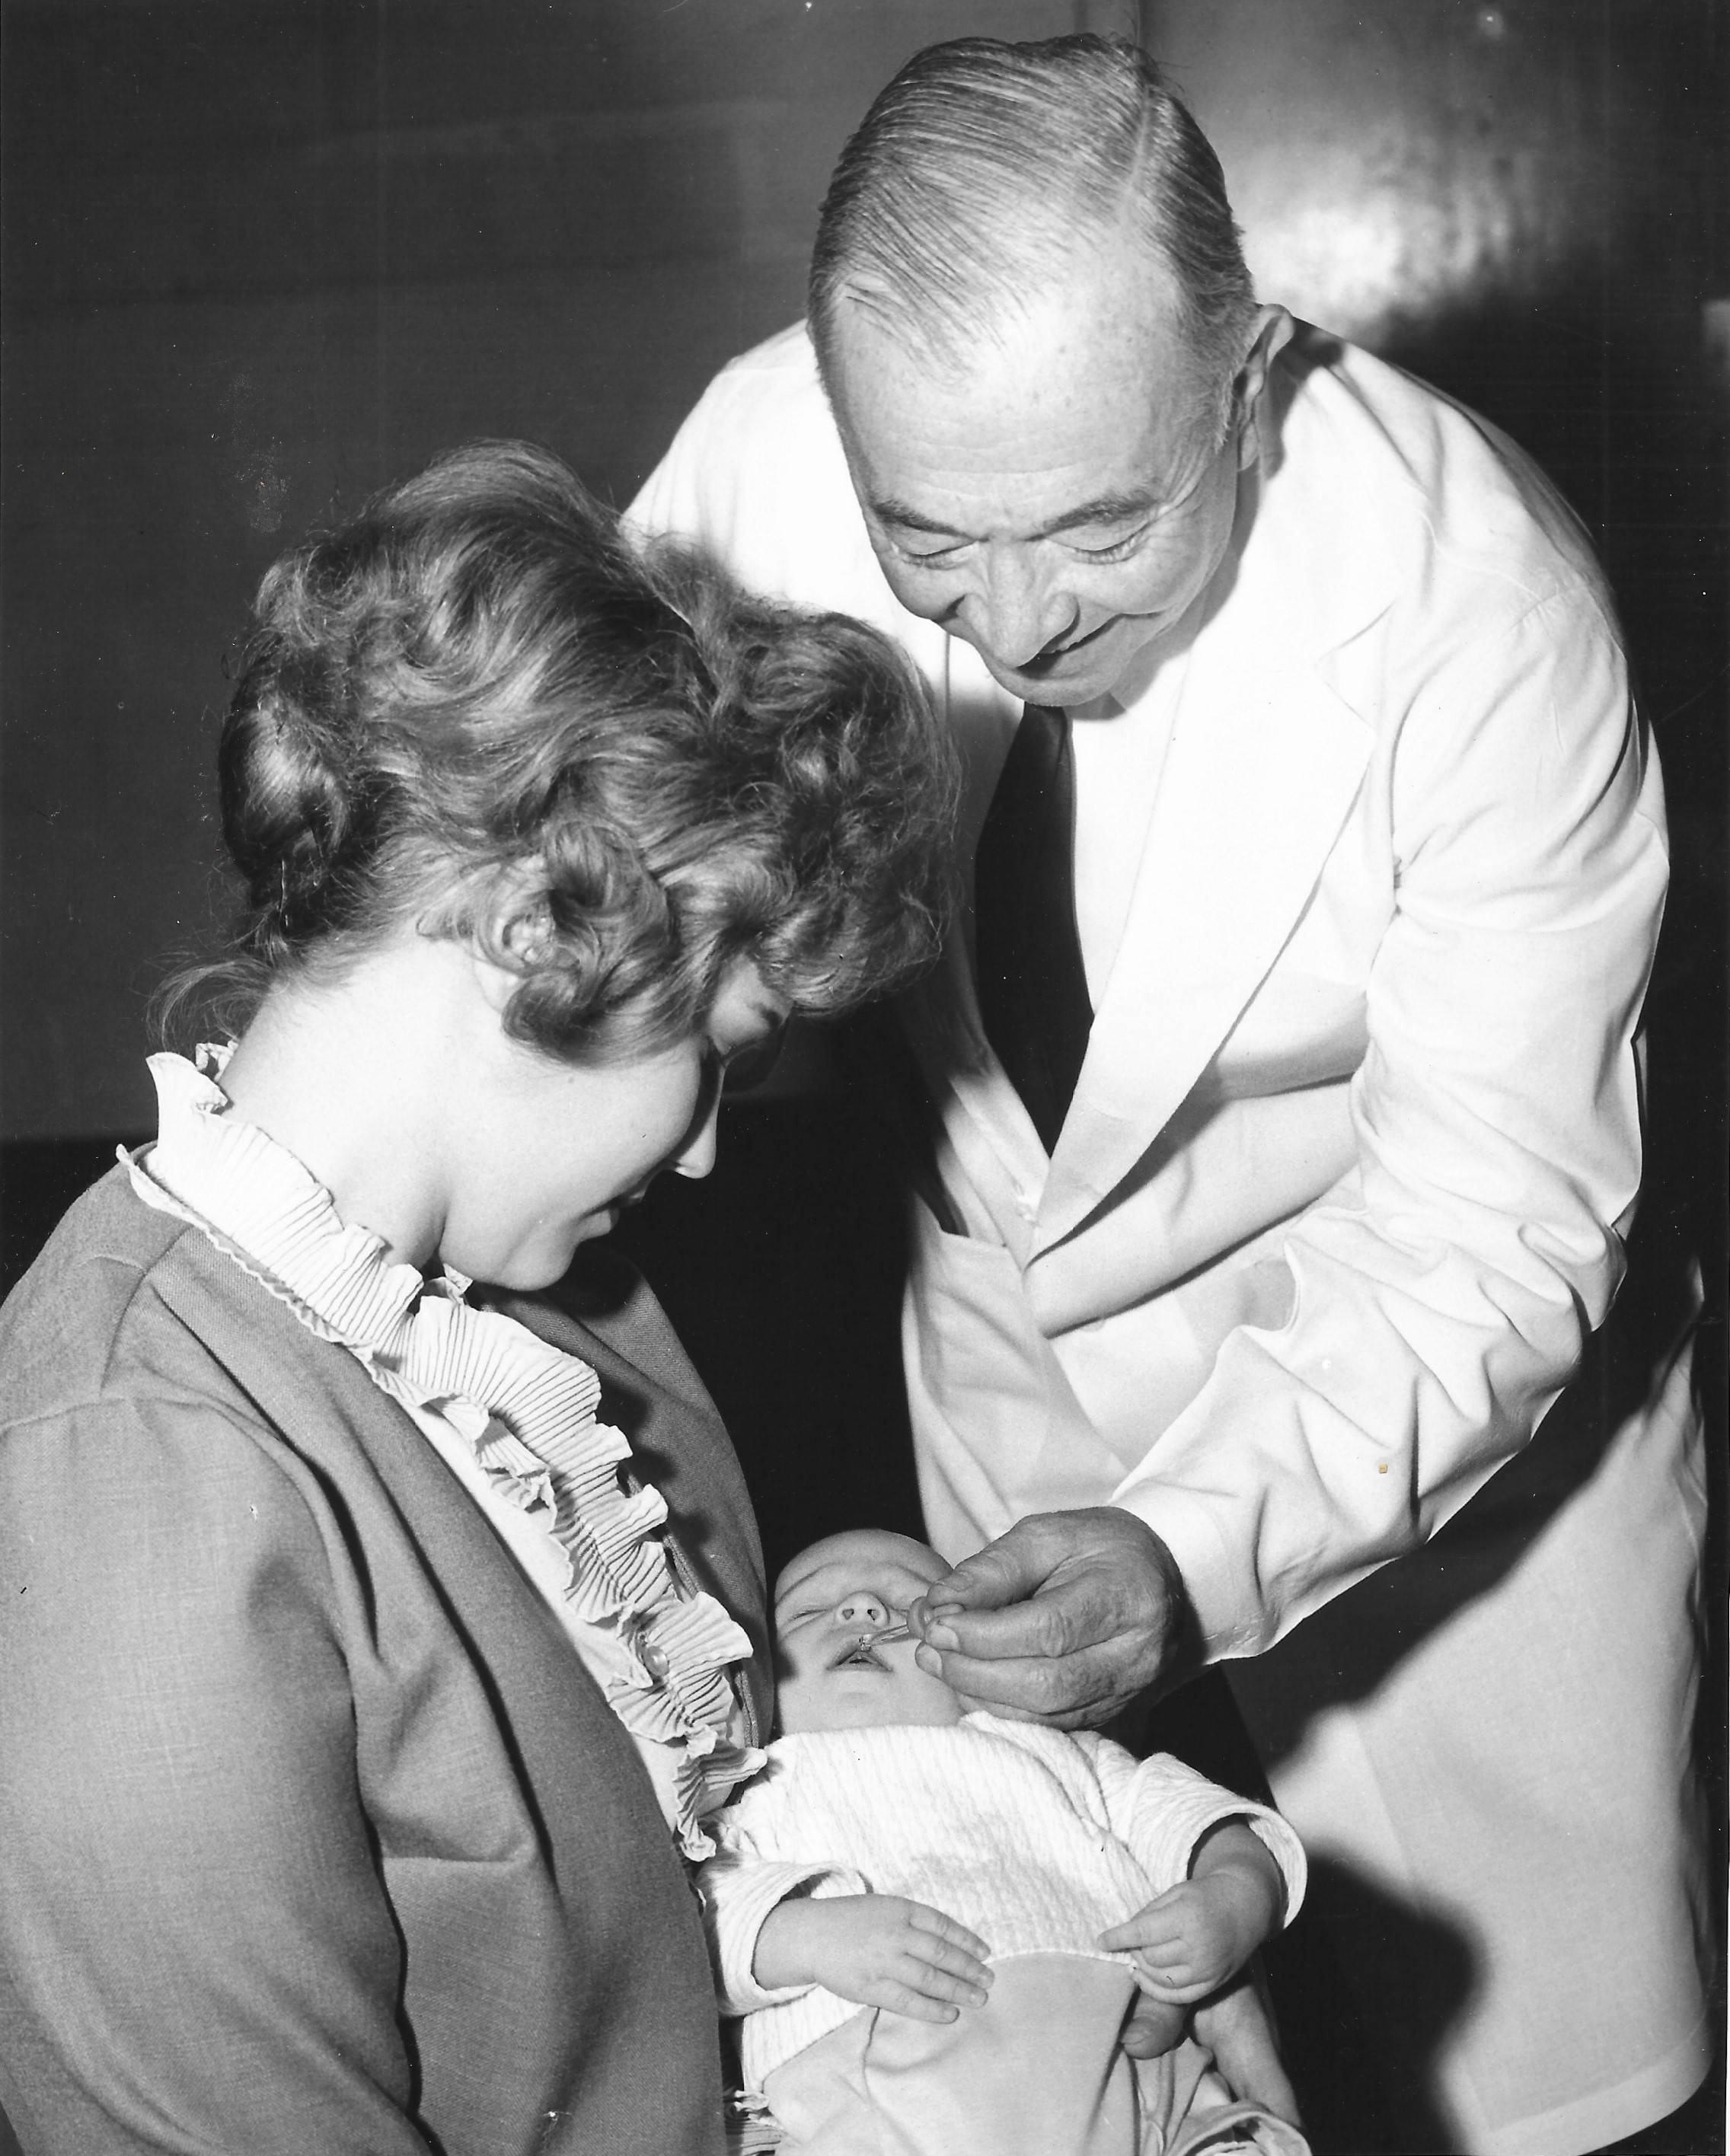 Dr. Robert Rogoff of Charity Hospital vaccinates infant Lecia Lynn Carter.